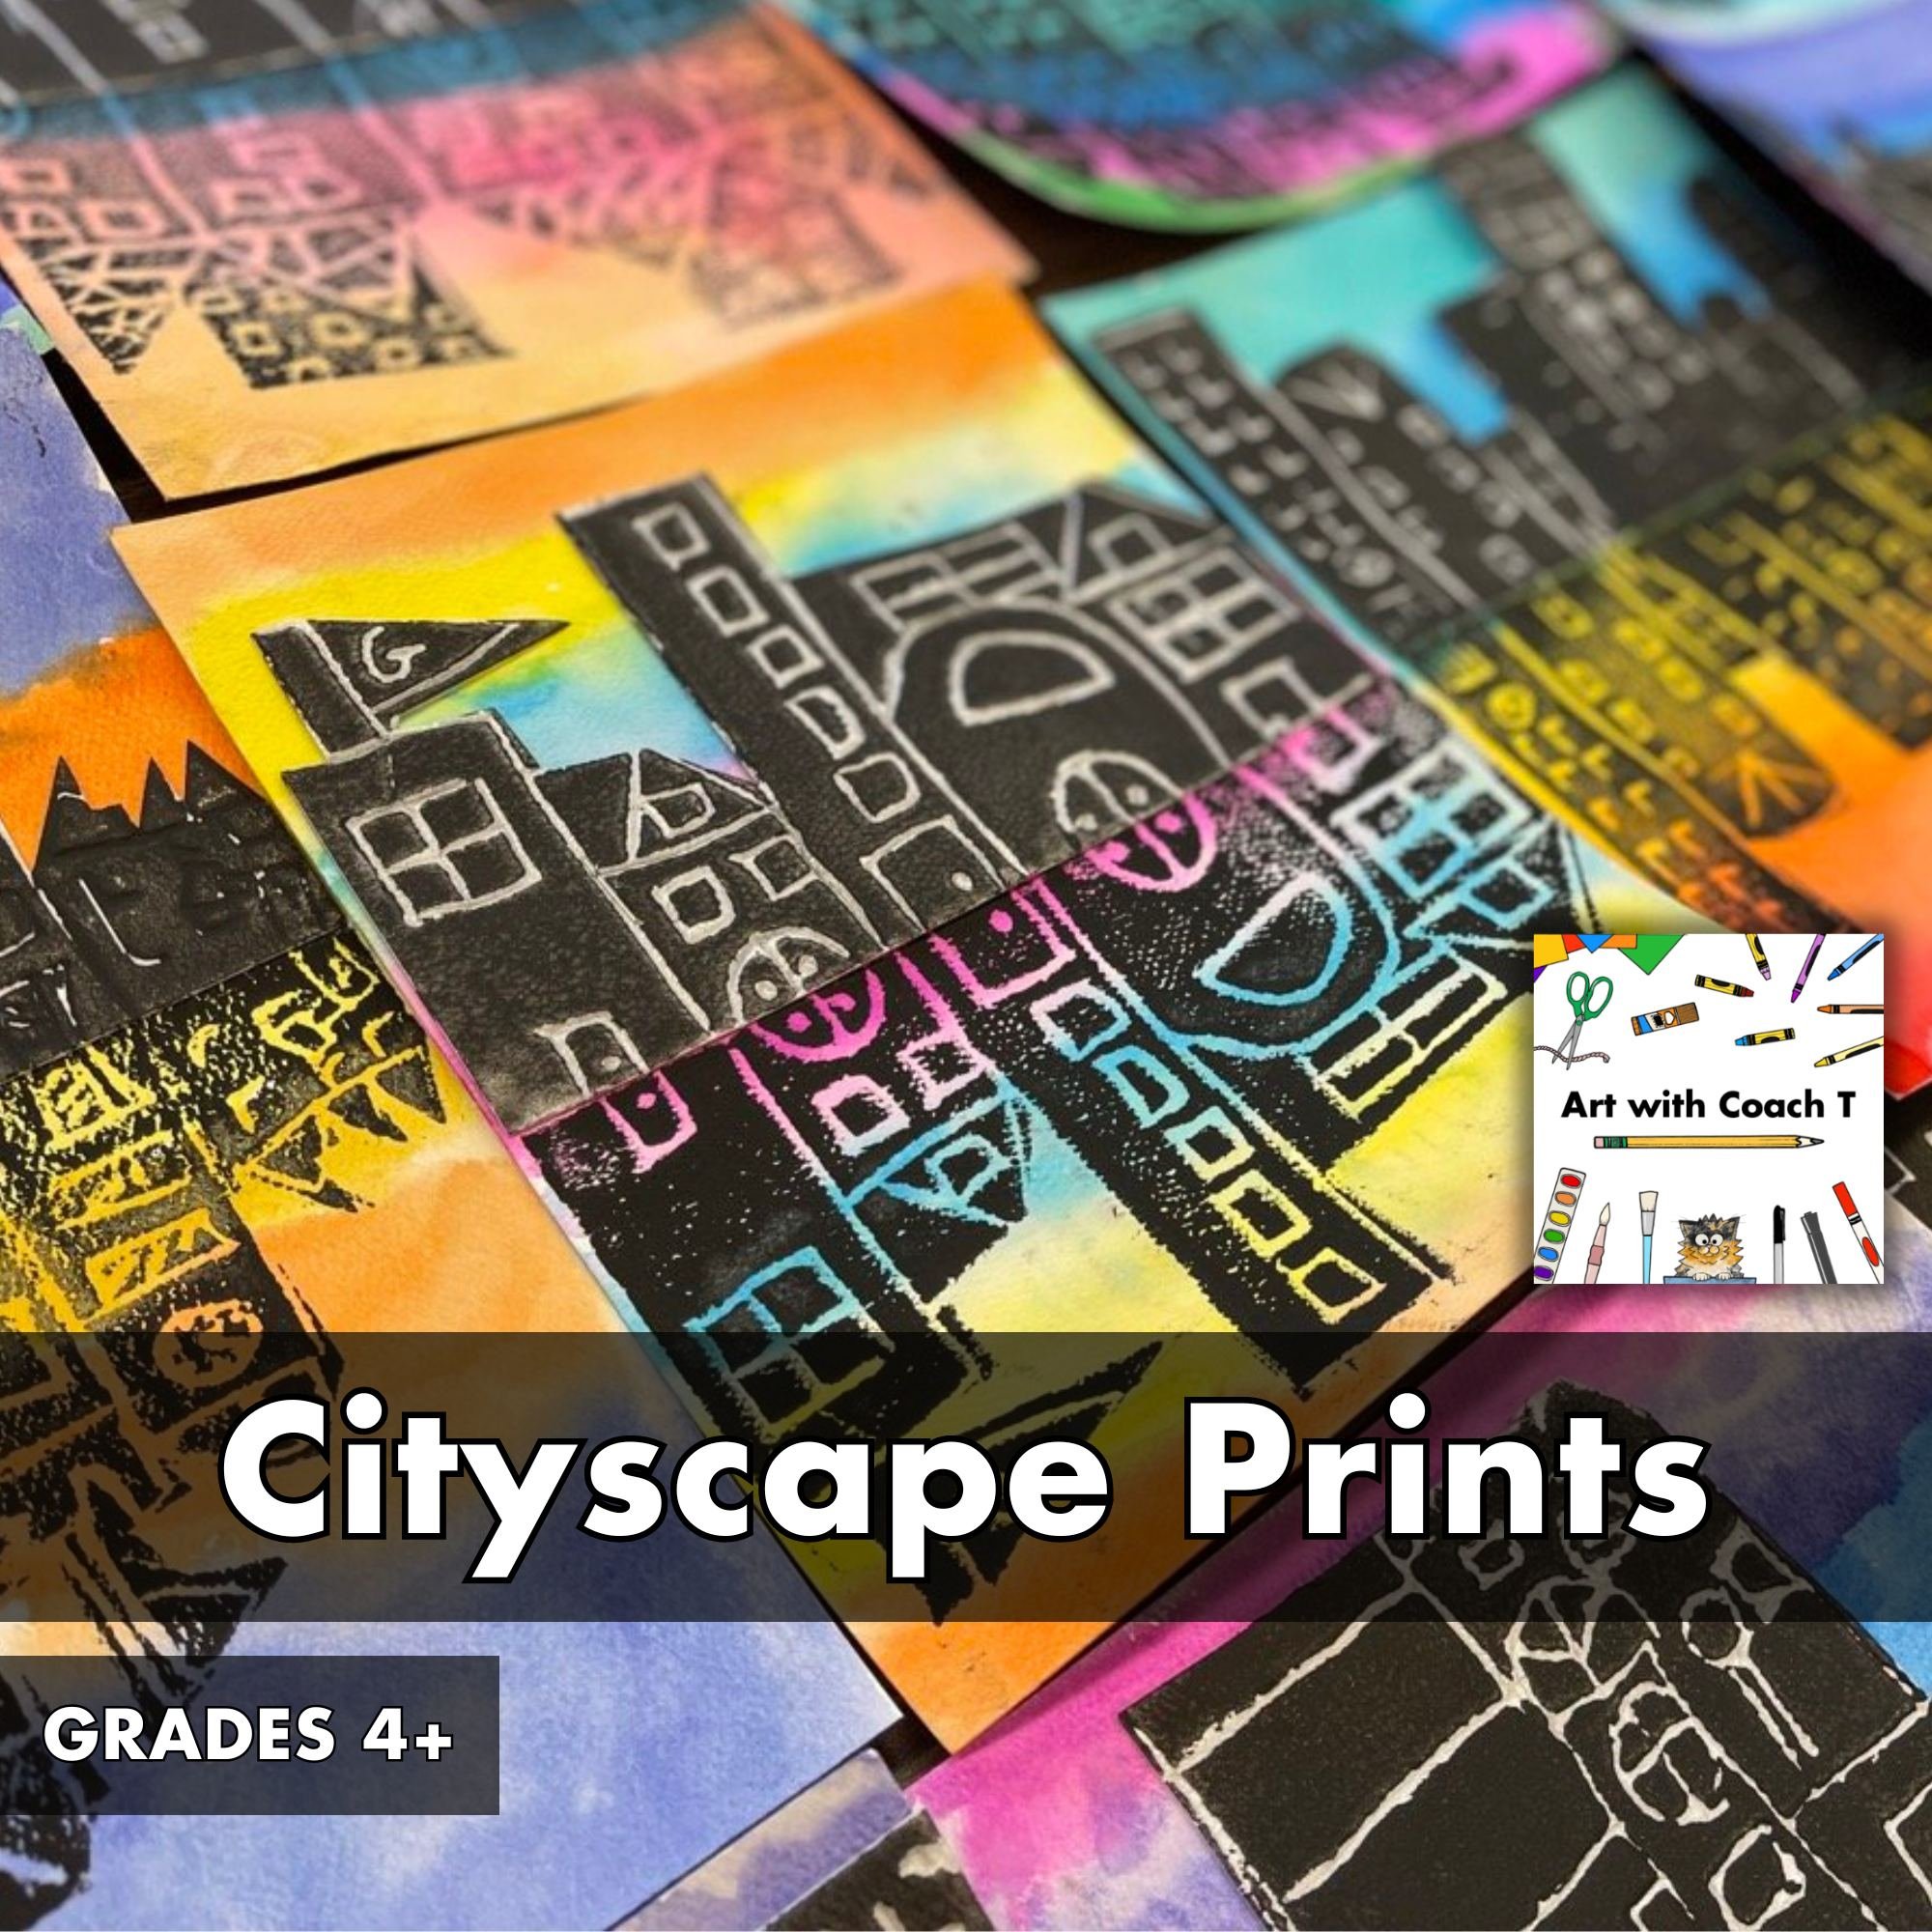 Cityscape Prints TpT Cover.jpg